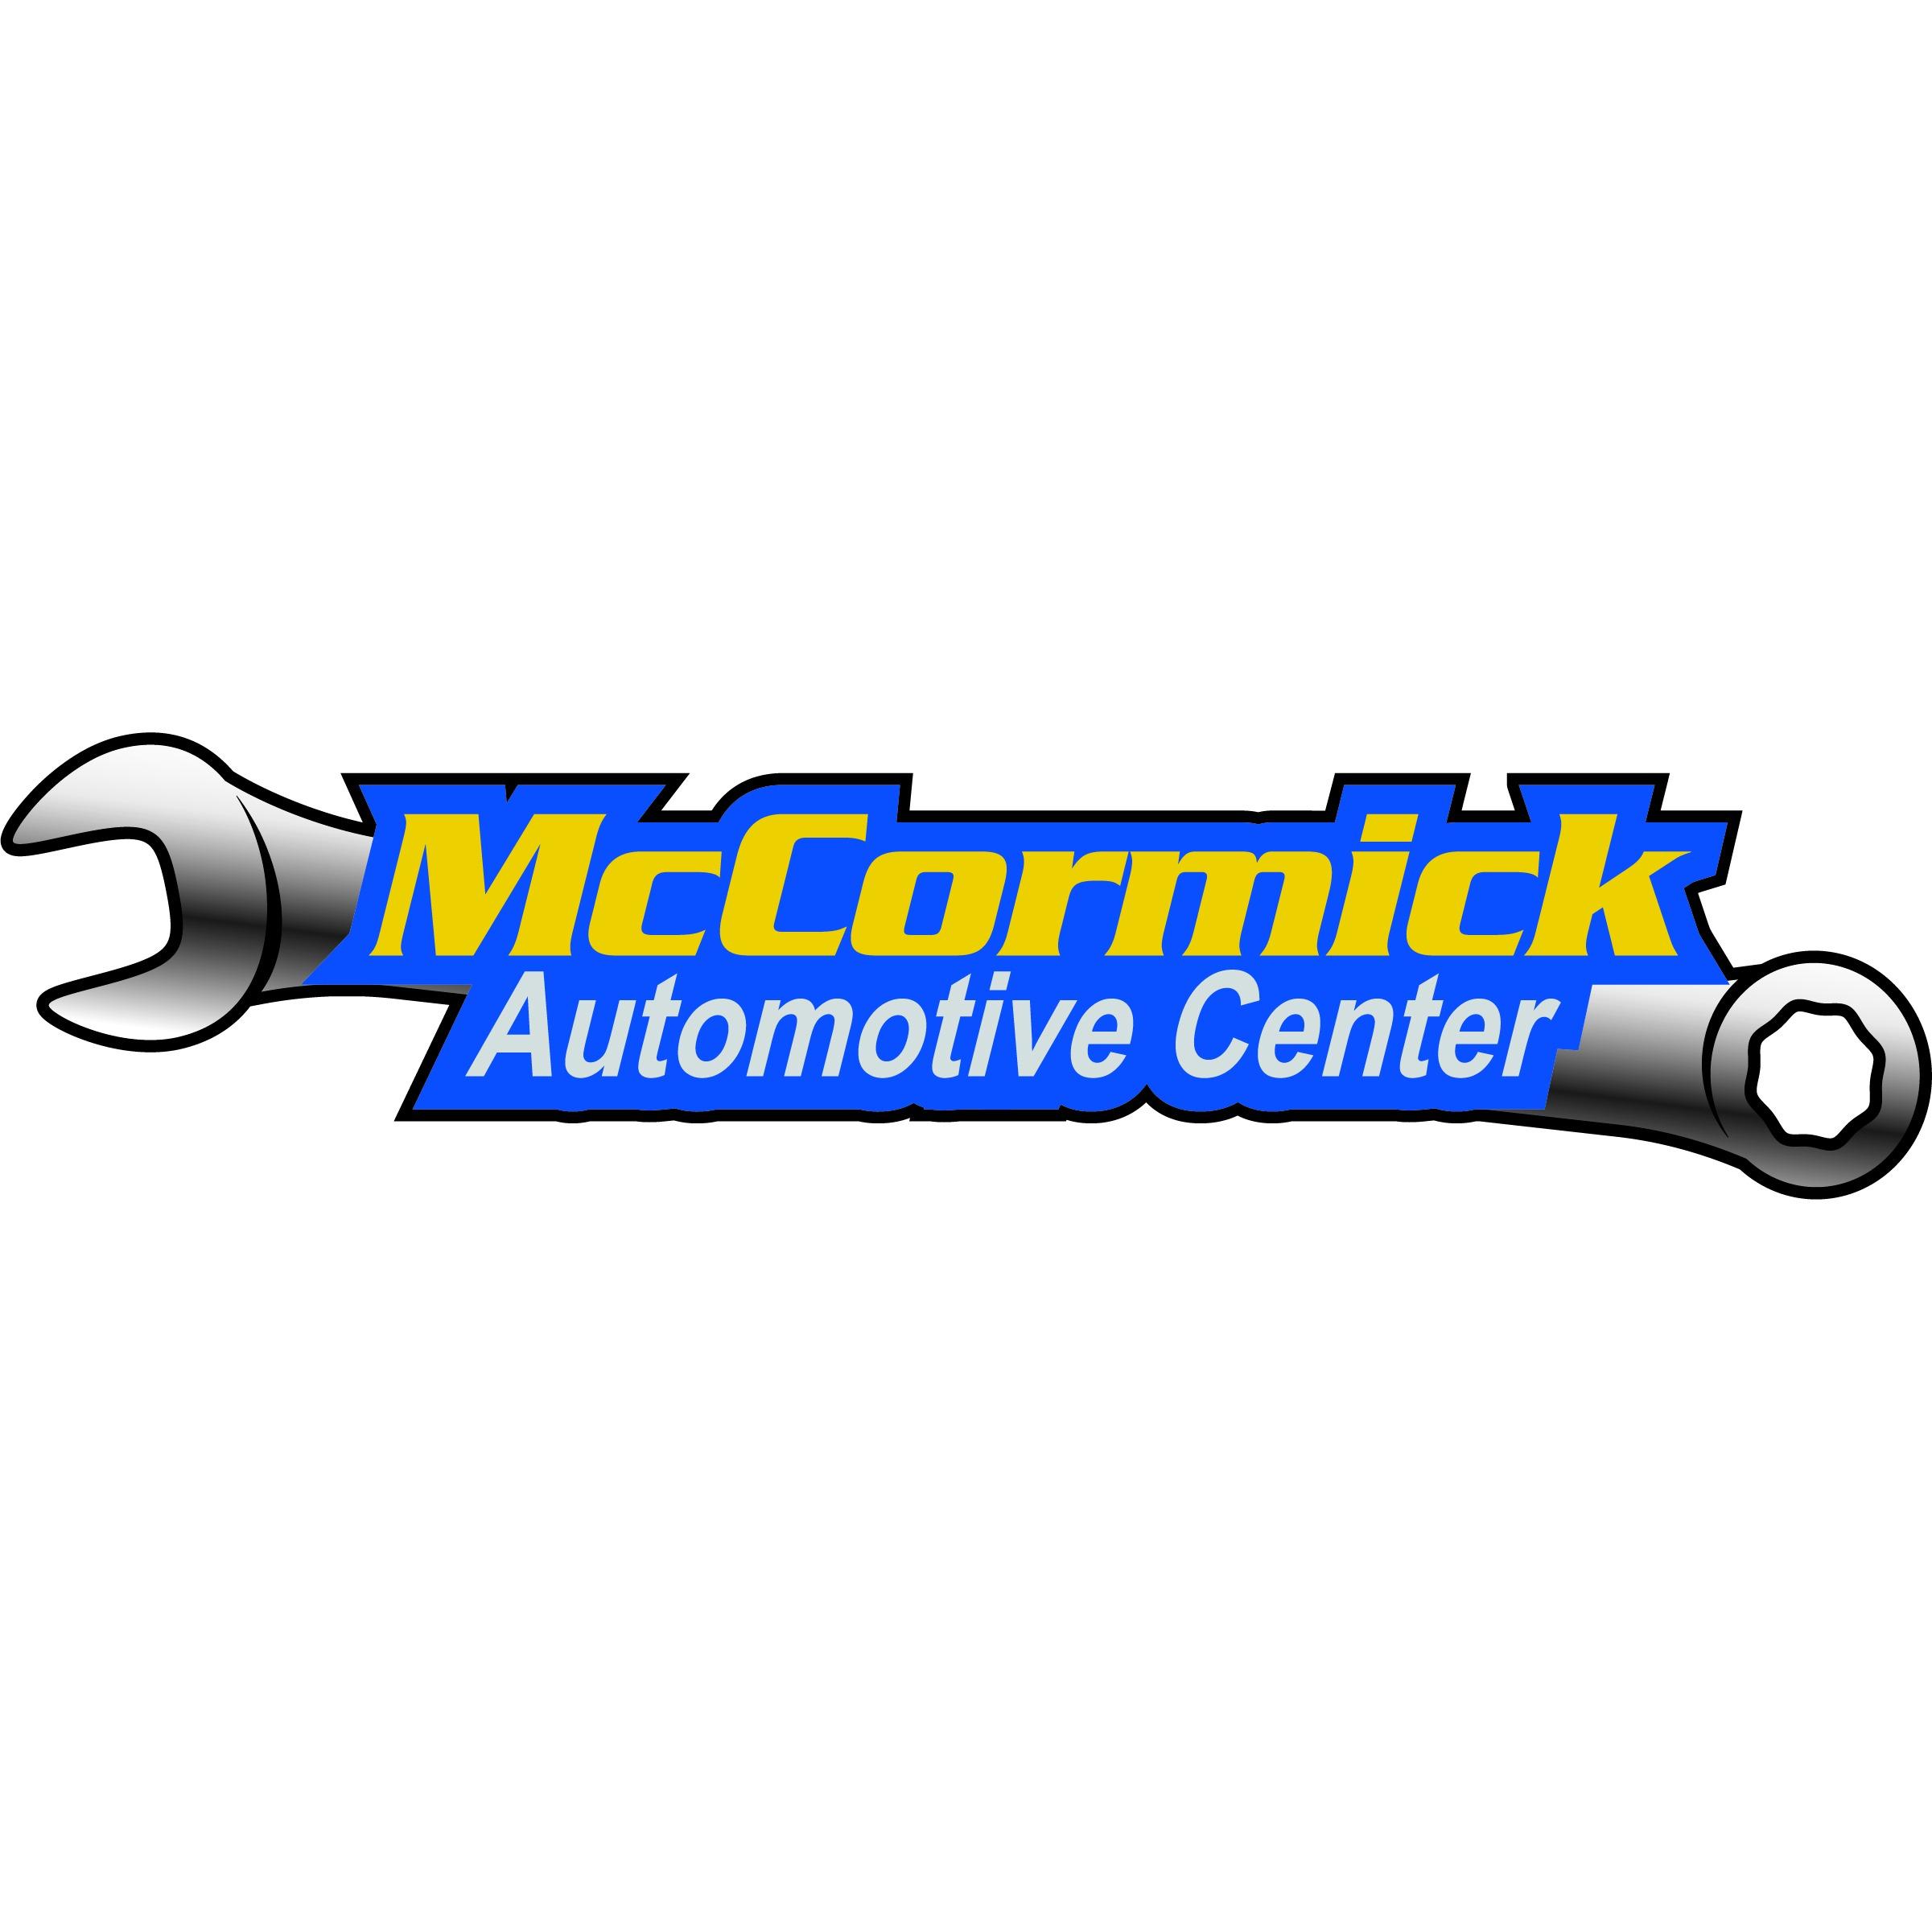 McCormick Automotive Center Fort Collins (970)472-2030